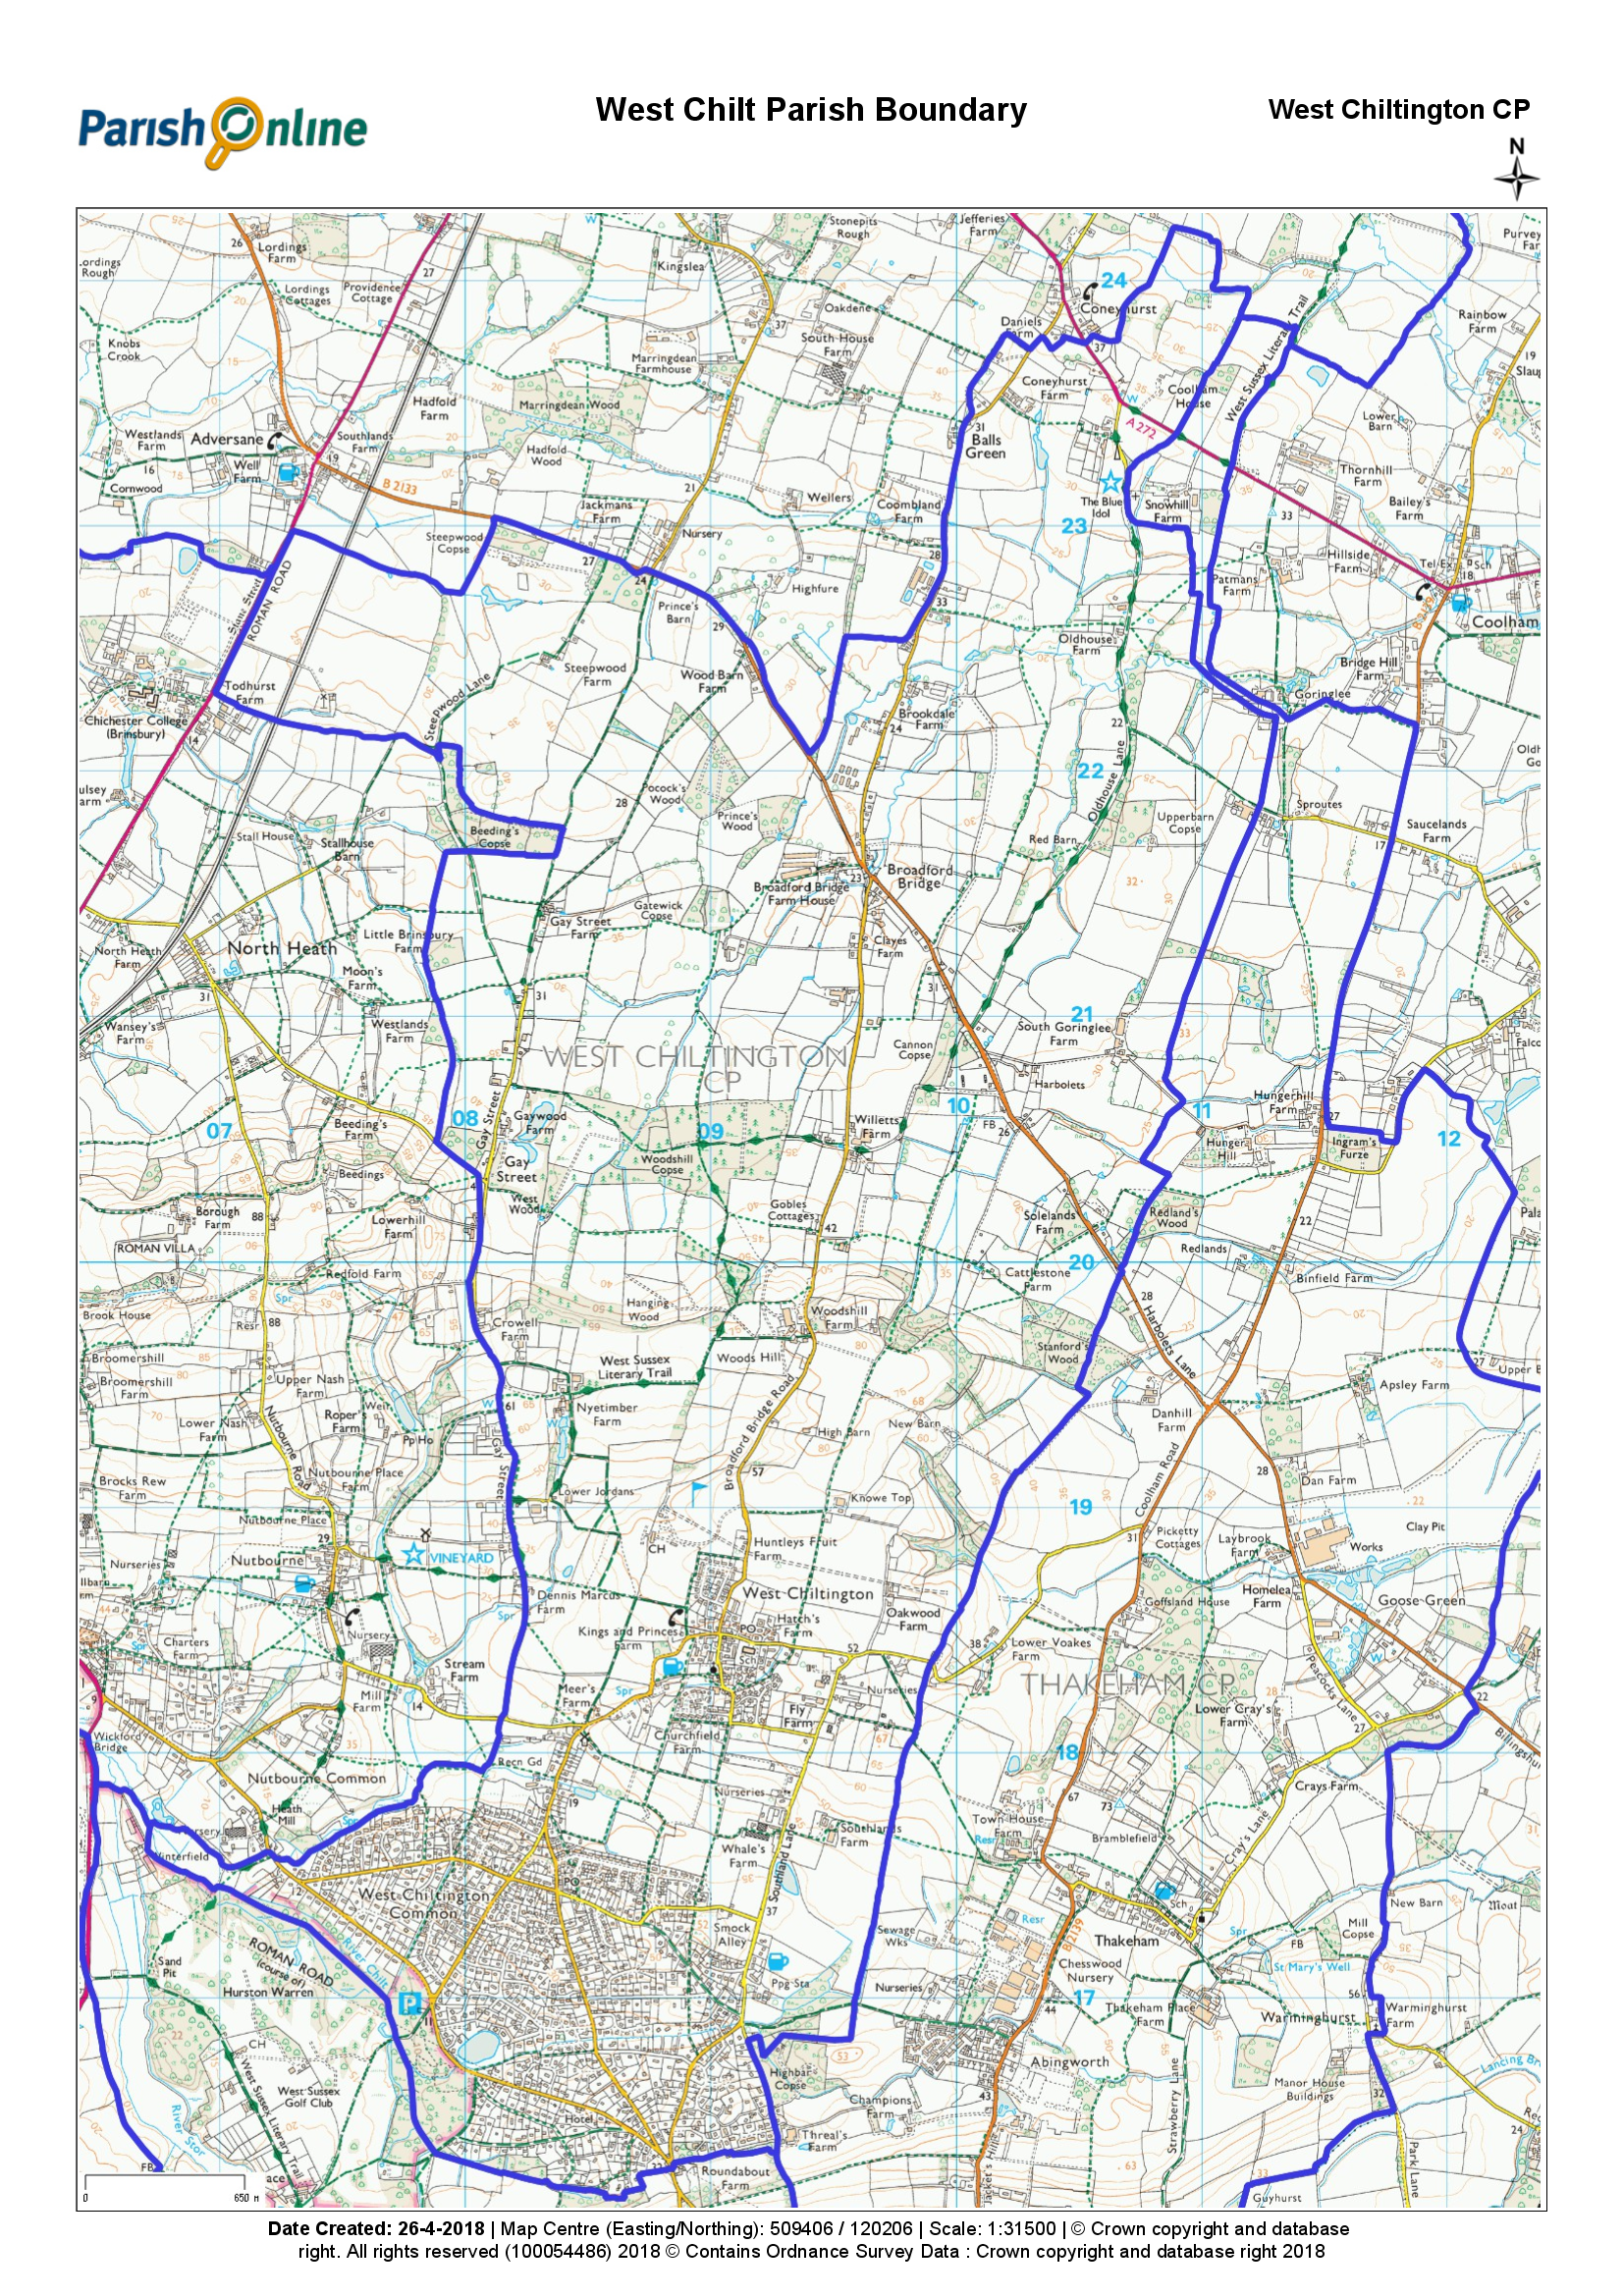 Image of the parish boundary